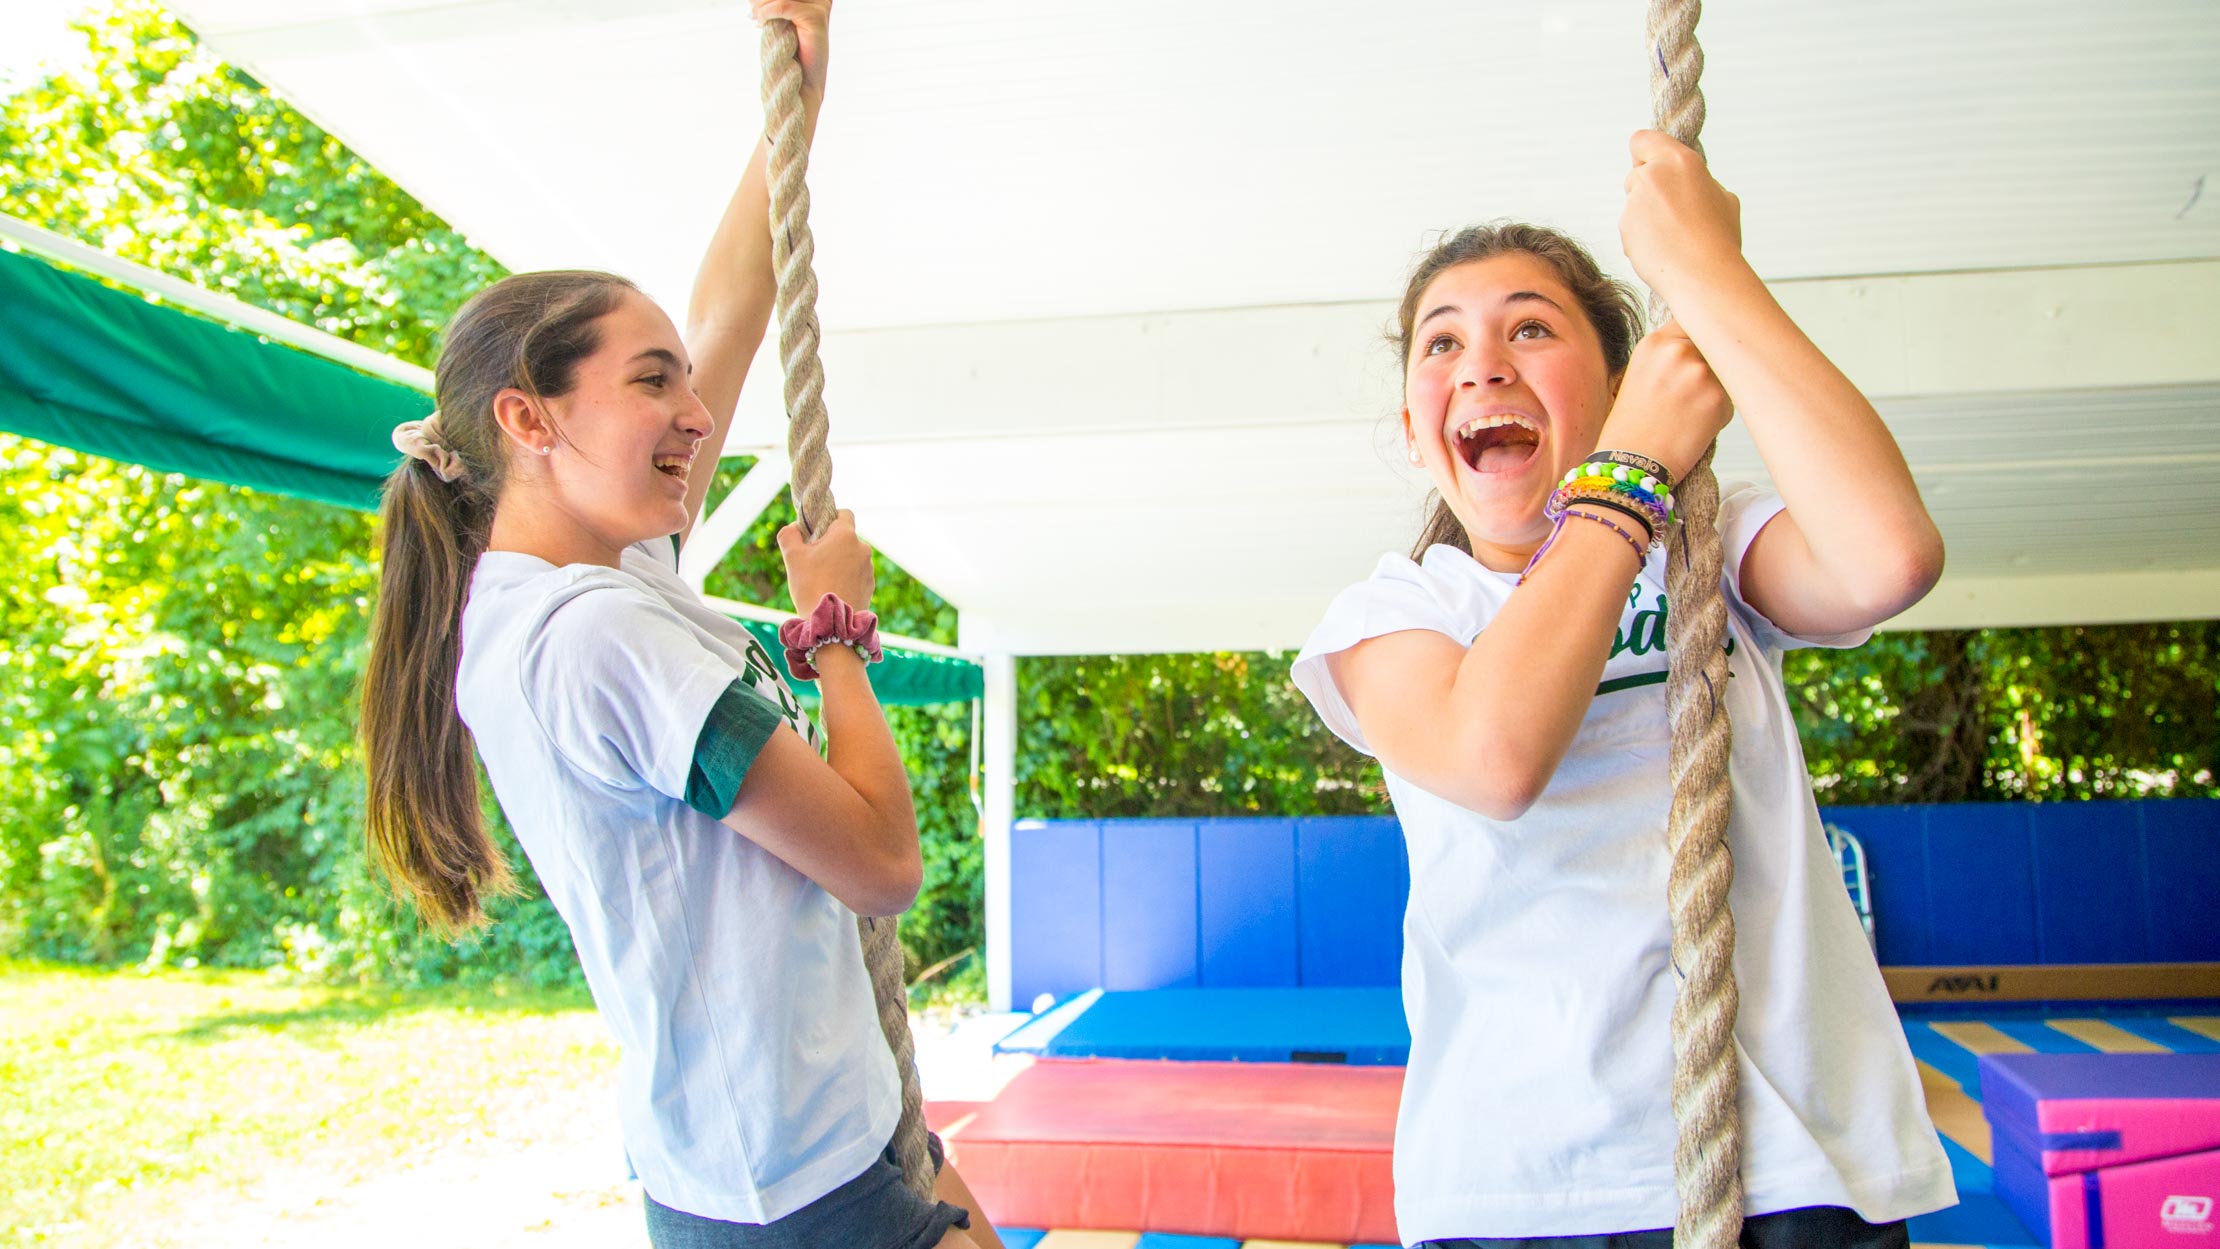 Smiling girls hang onto vertical ropes